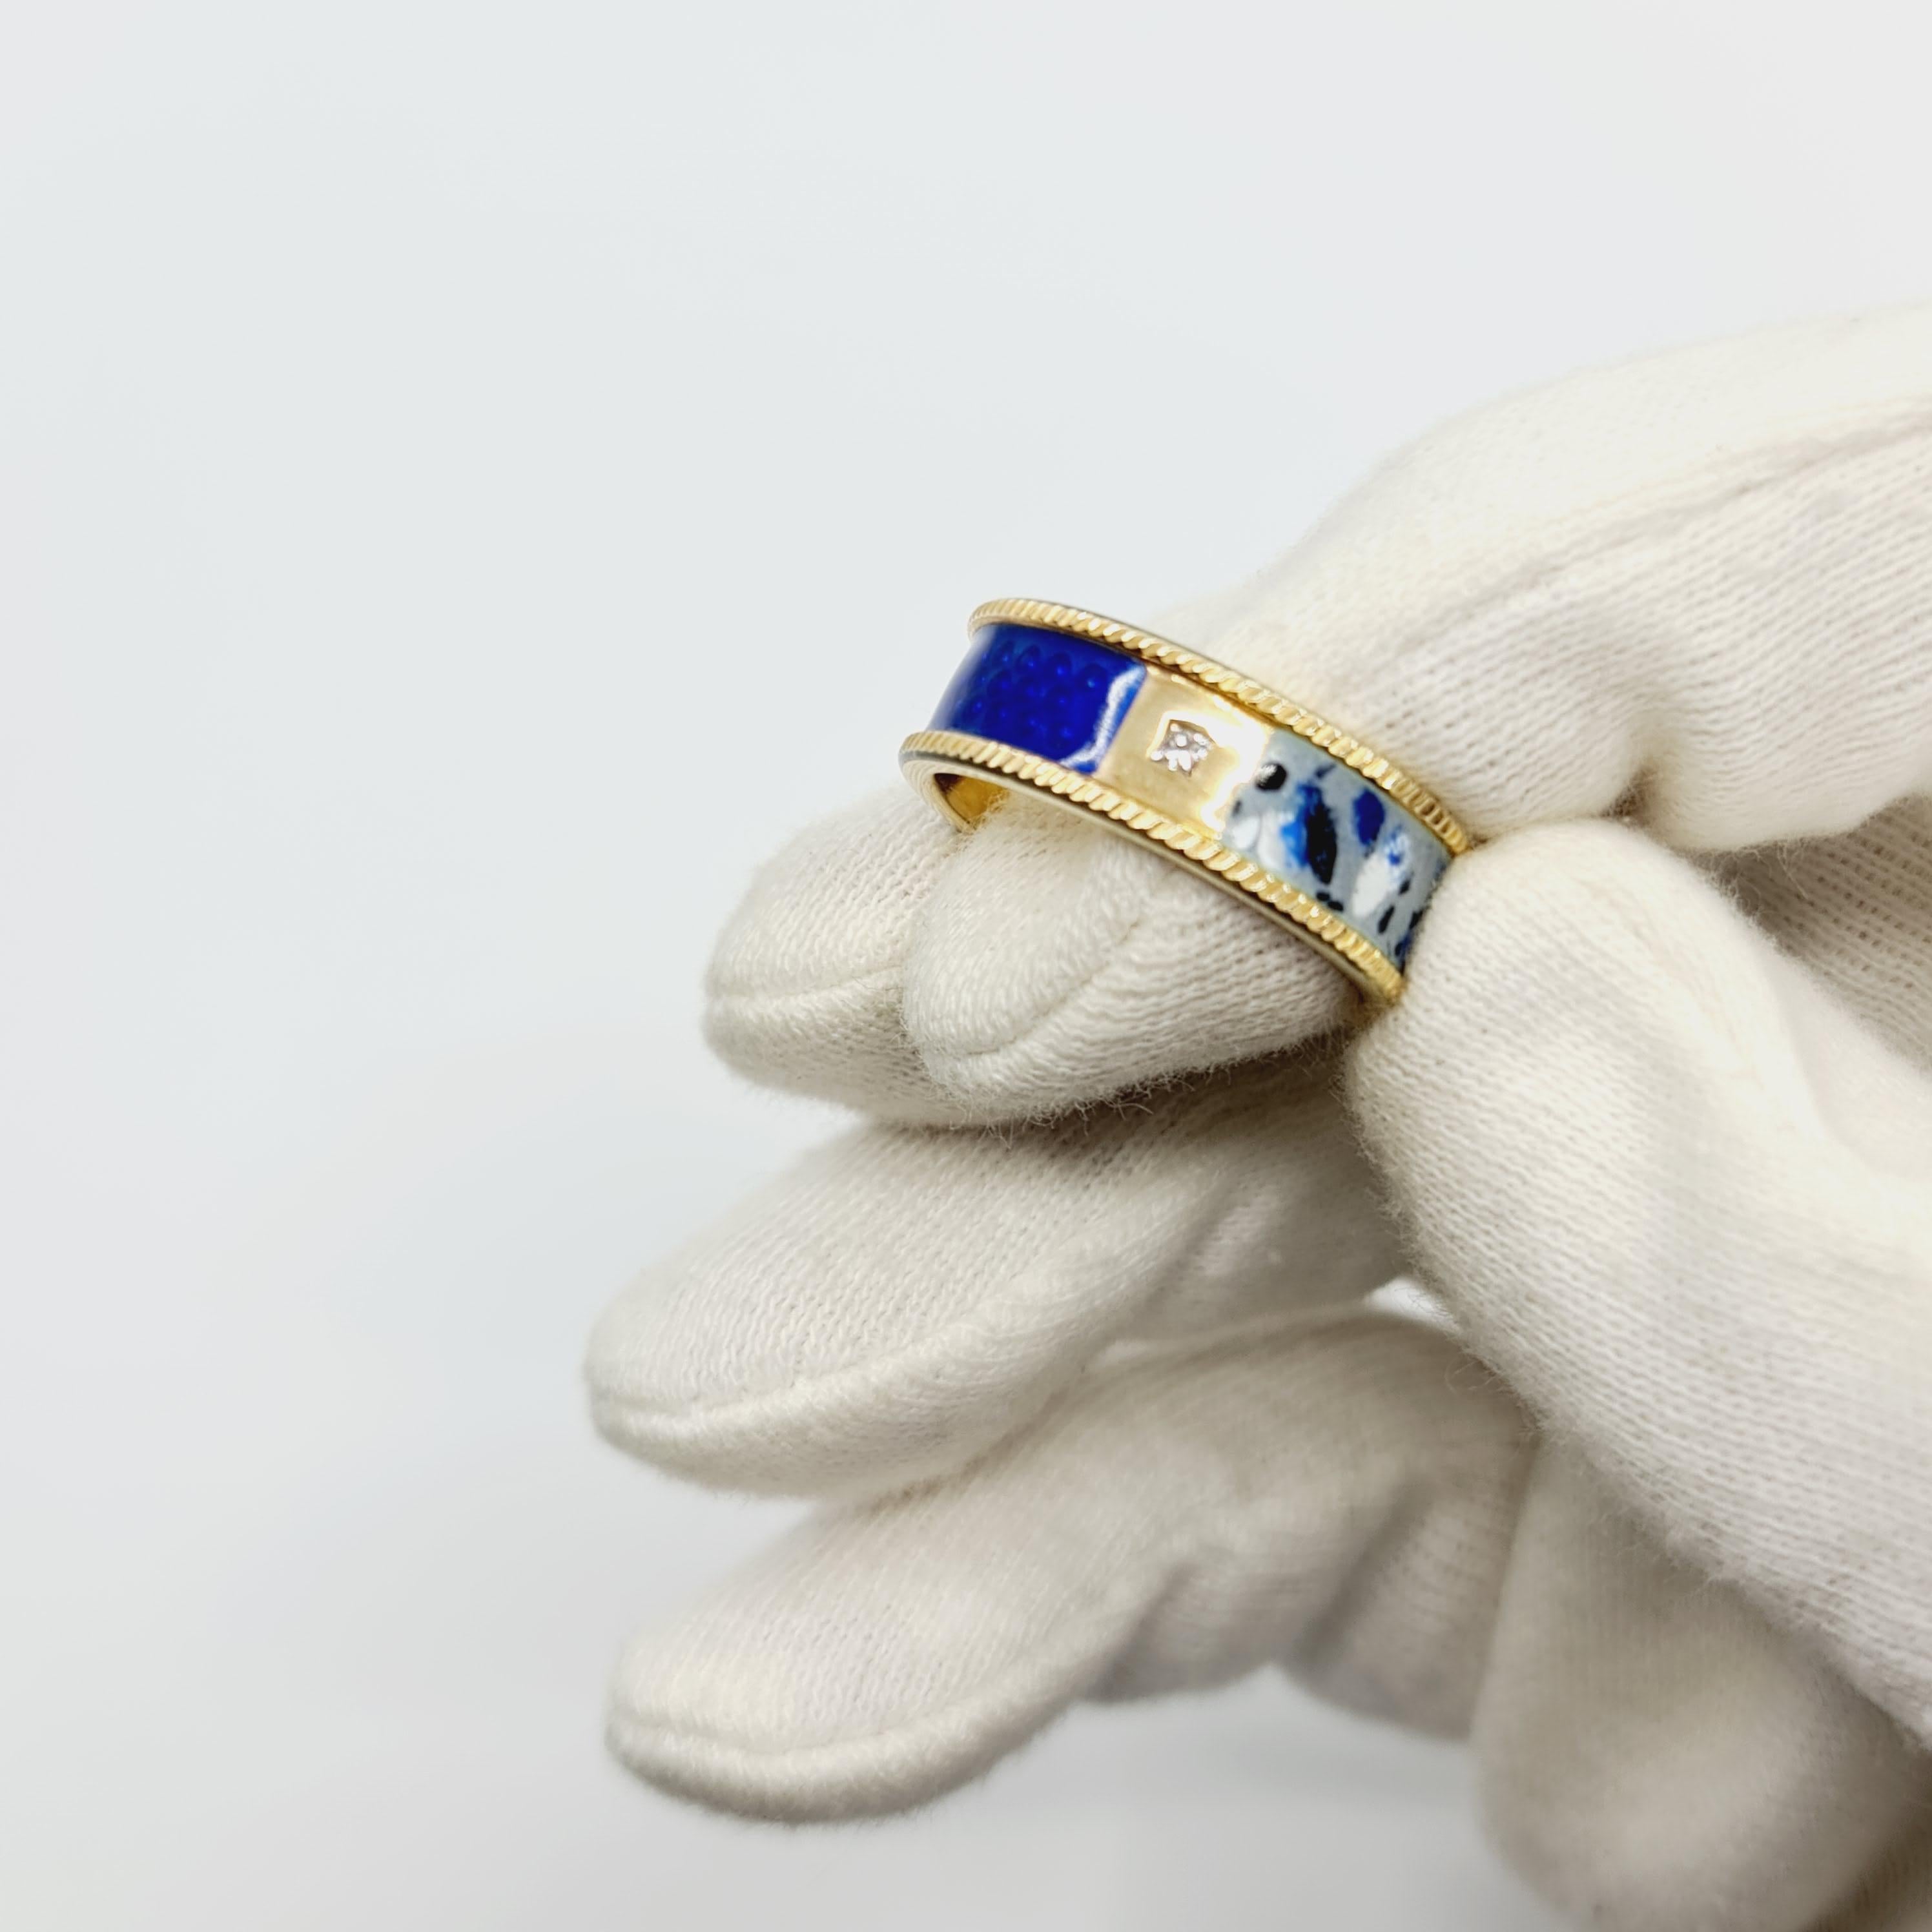 0.05 Carat Princess Cut Diamond Ring G/IF 14k Gold, Blue/Grey/White Enamel For Sale 5